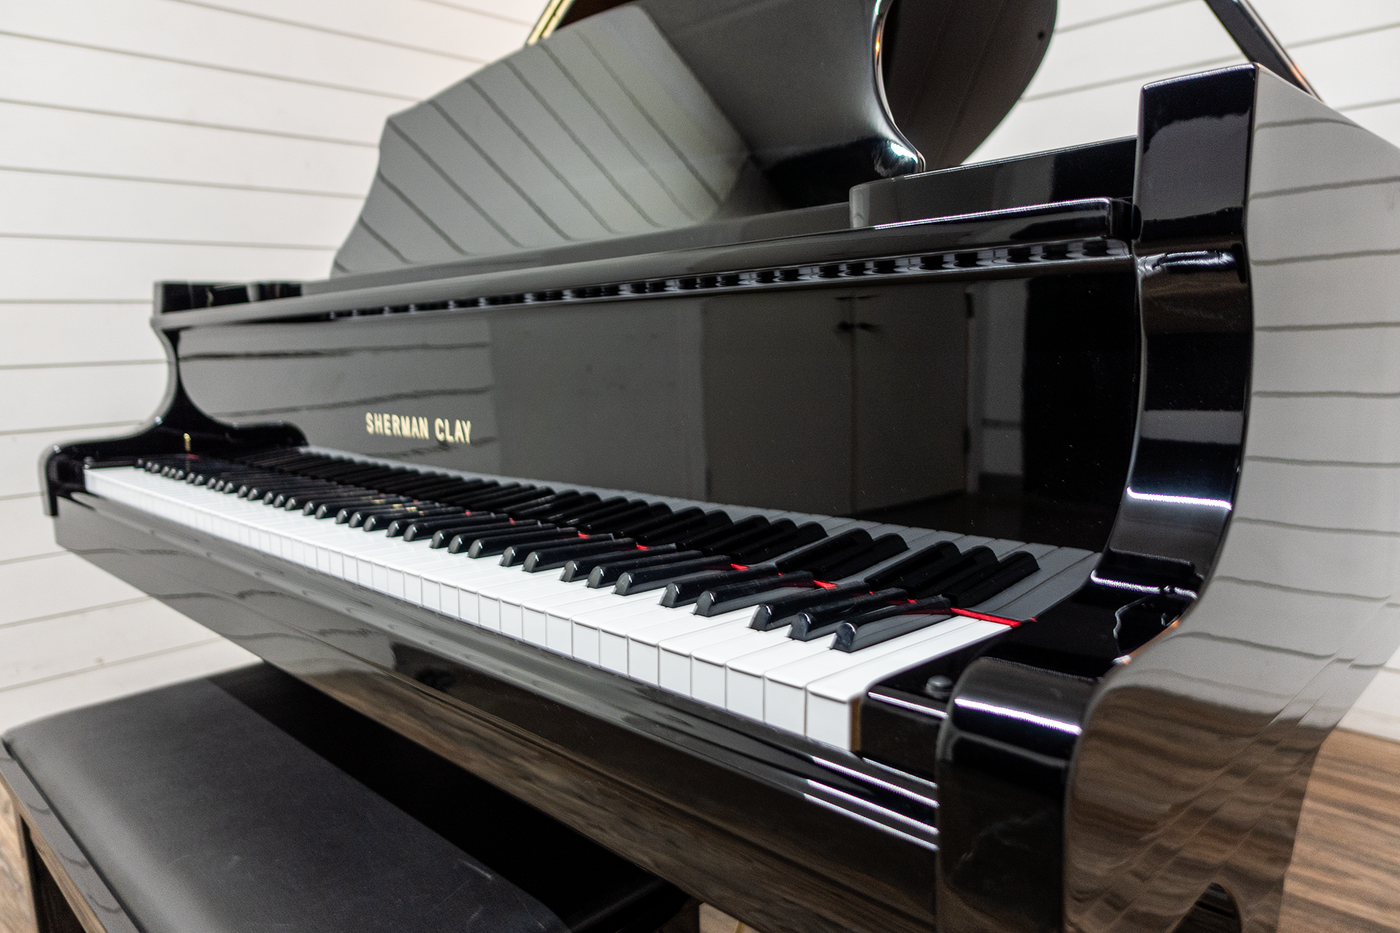 Sherman Clay SDG2 Baby Grand Piano